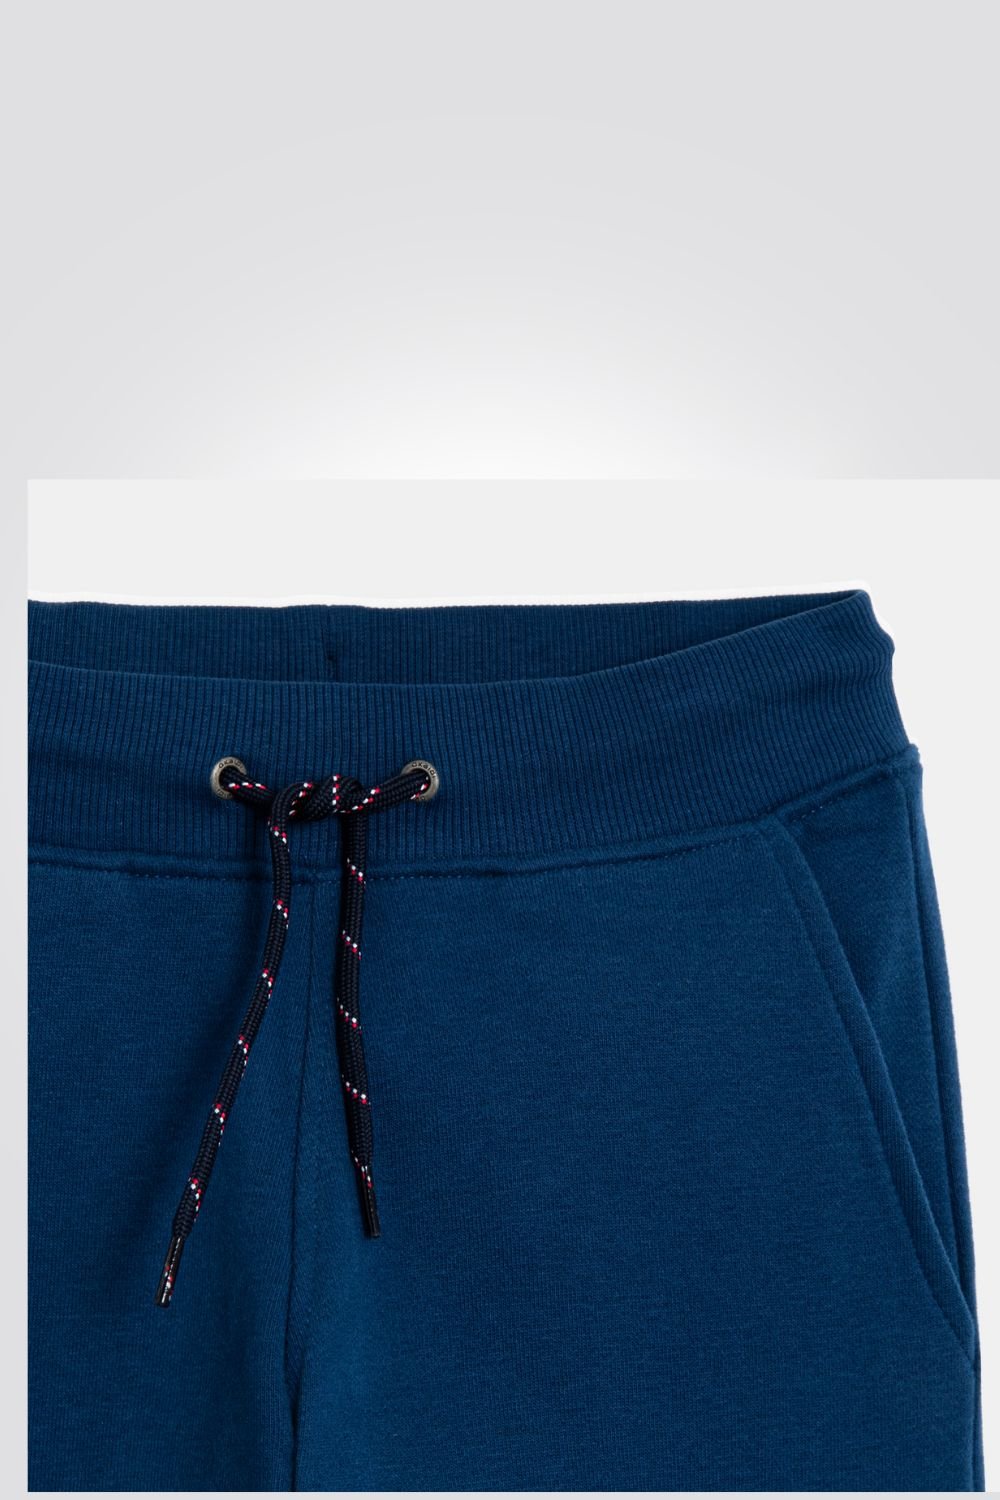 OKAIDI - מכנס טרנינג בנים בצבע אקווה - MASHBIR//365